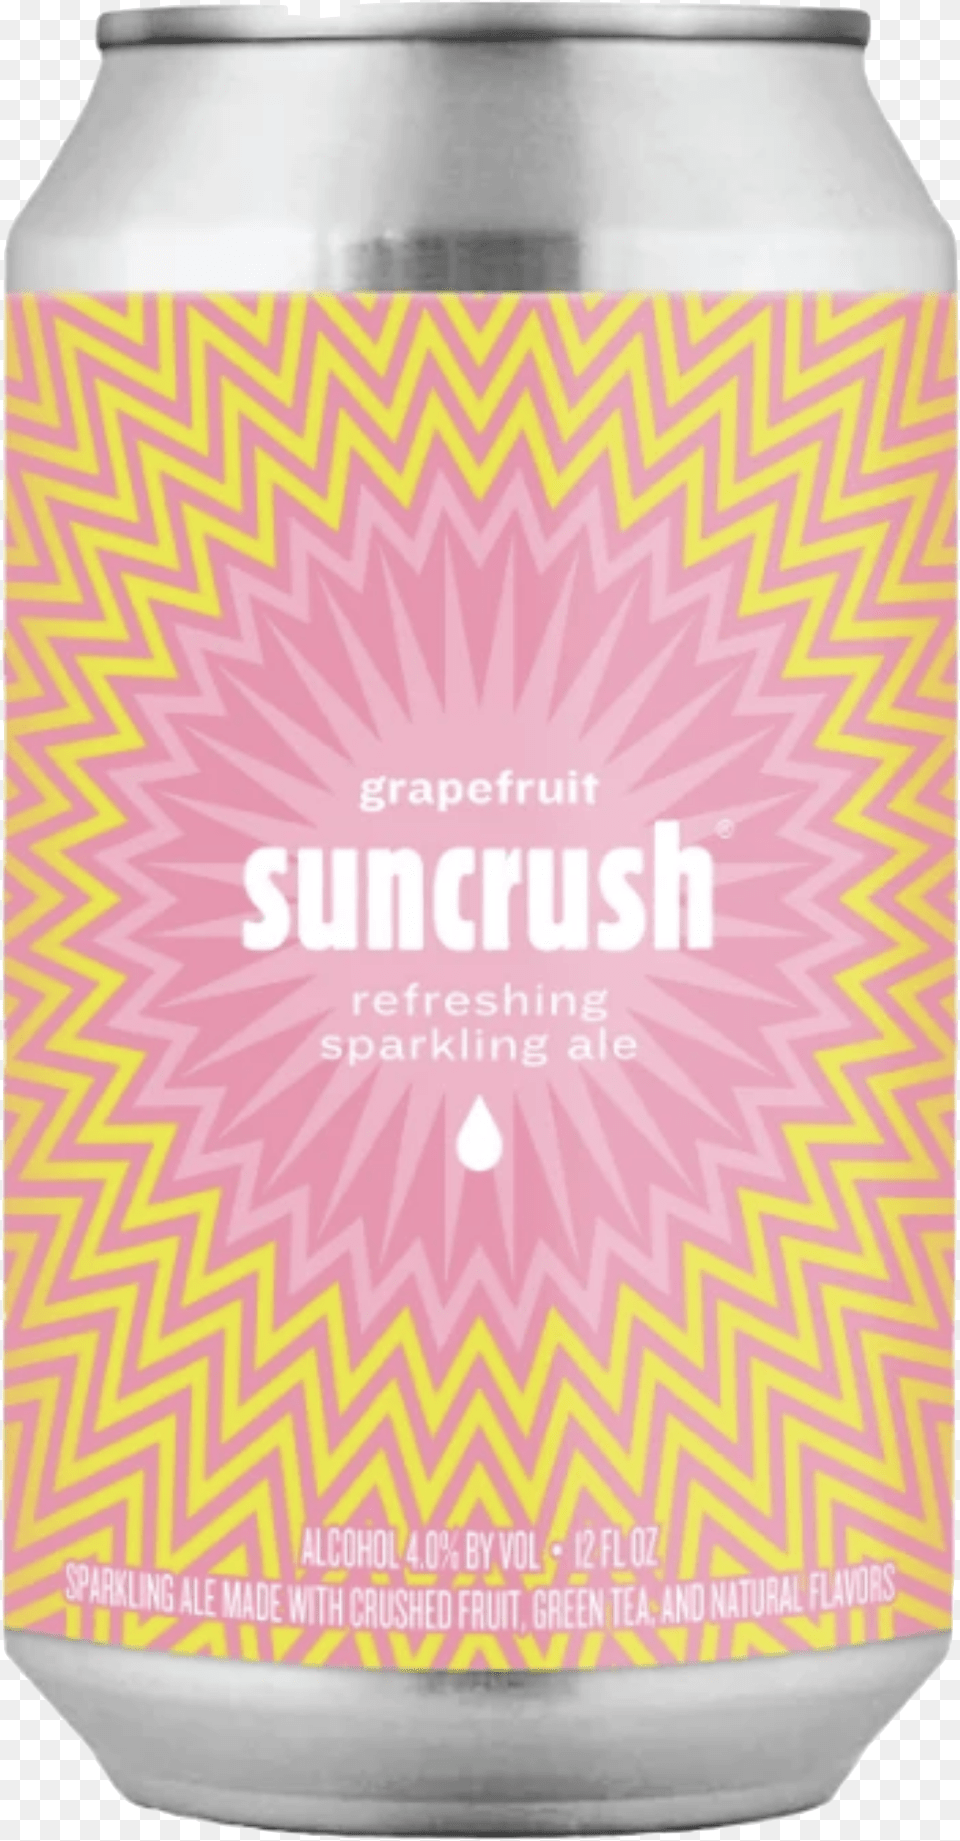 Suncrush Grapefruit, Alcohol, Beer, Beverage, Tin Free Png Download